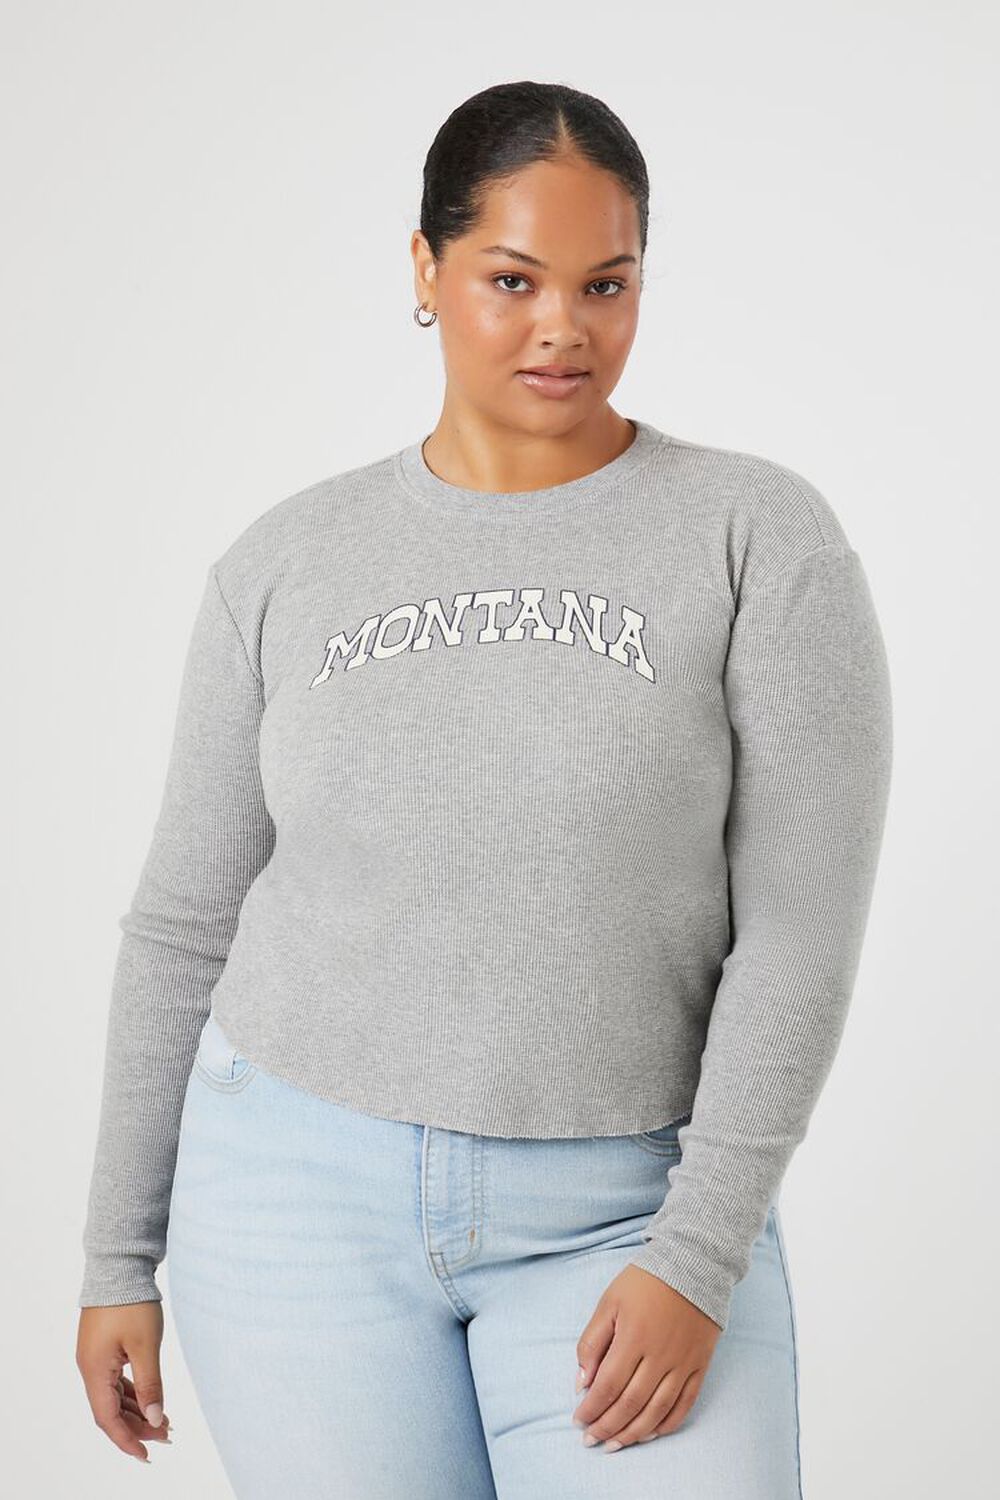 Plus Size Sweater-Knit V-Hem Tank Top